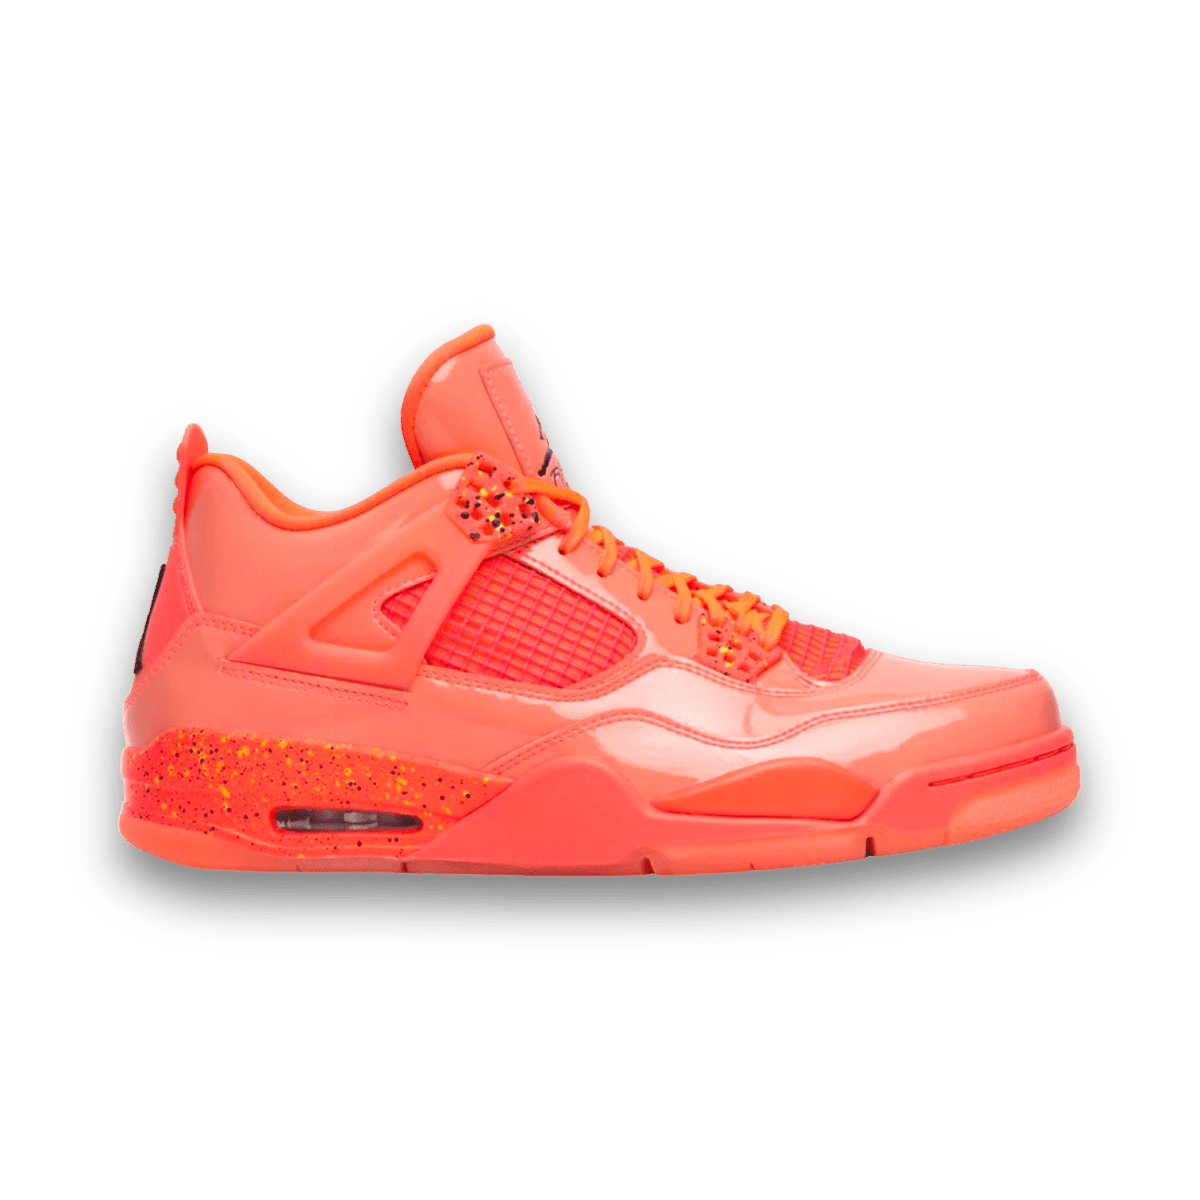 Air Jordan 4 Retro NRG 'Hot Punch' - Women - Mid Sneaker - Jordan - Jawns on Fire - sneakers